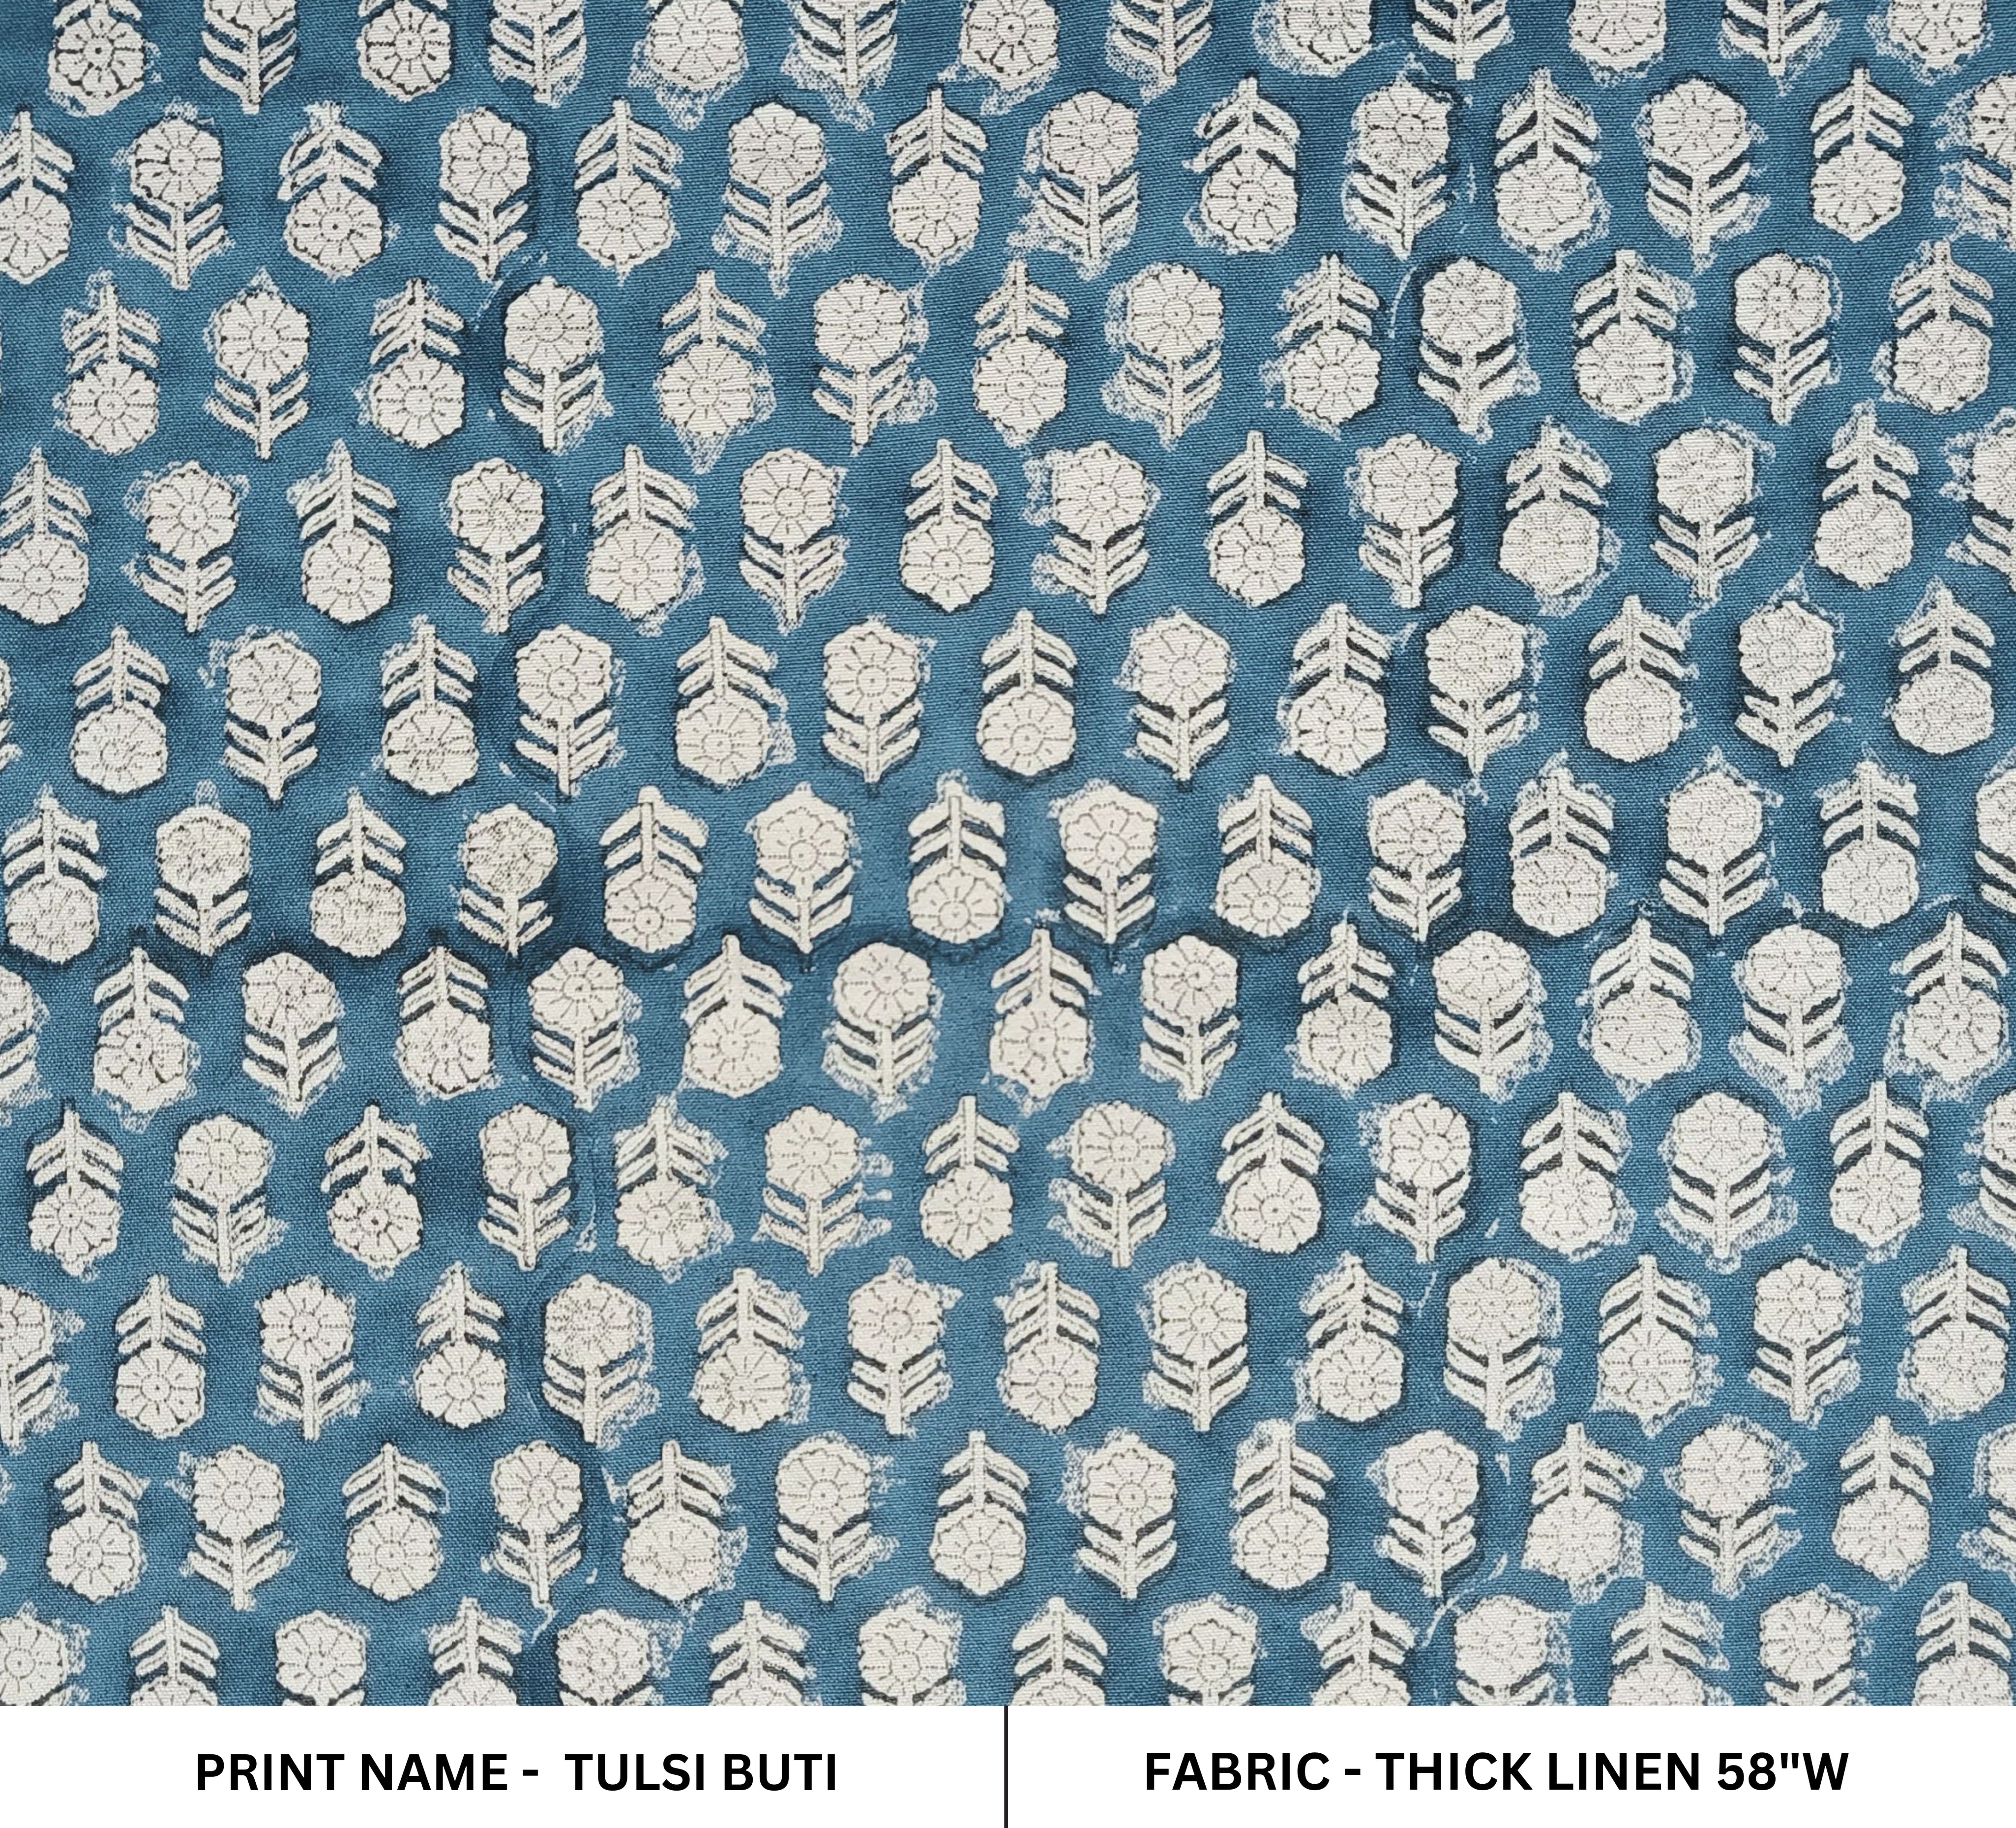 Block Print Linen Fabric, Tulsi Buti  Organic Block Print Linen Fabric  Hand Block Indian  Floral Print Linen Fabric From India, Upholstery And Pillow Cases